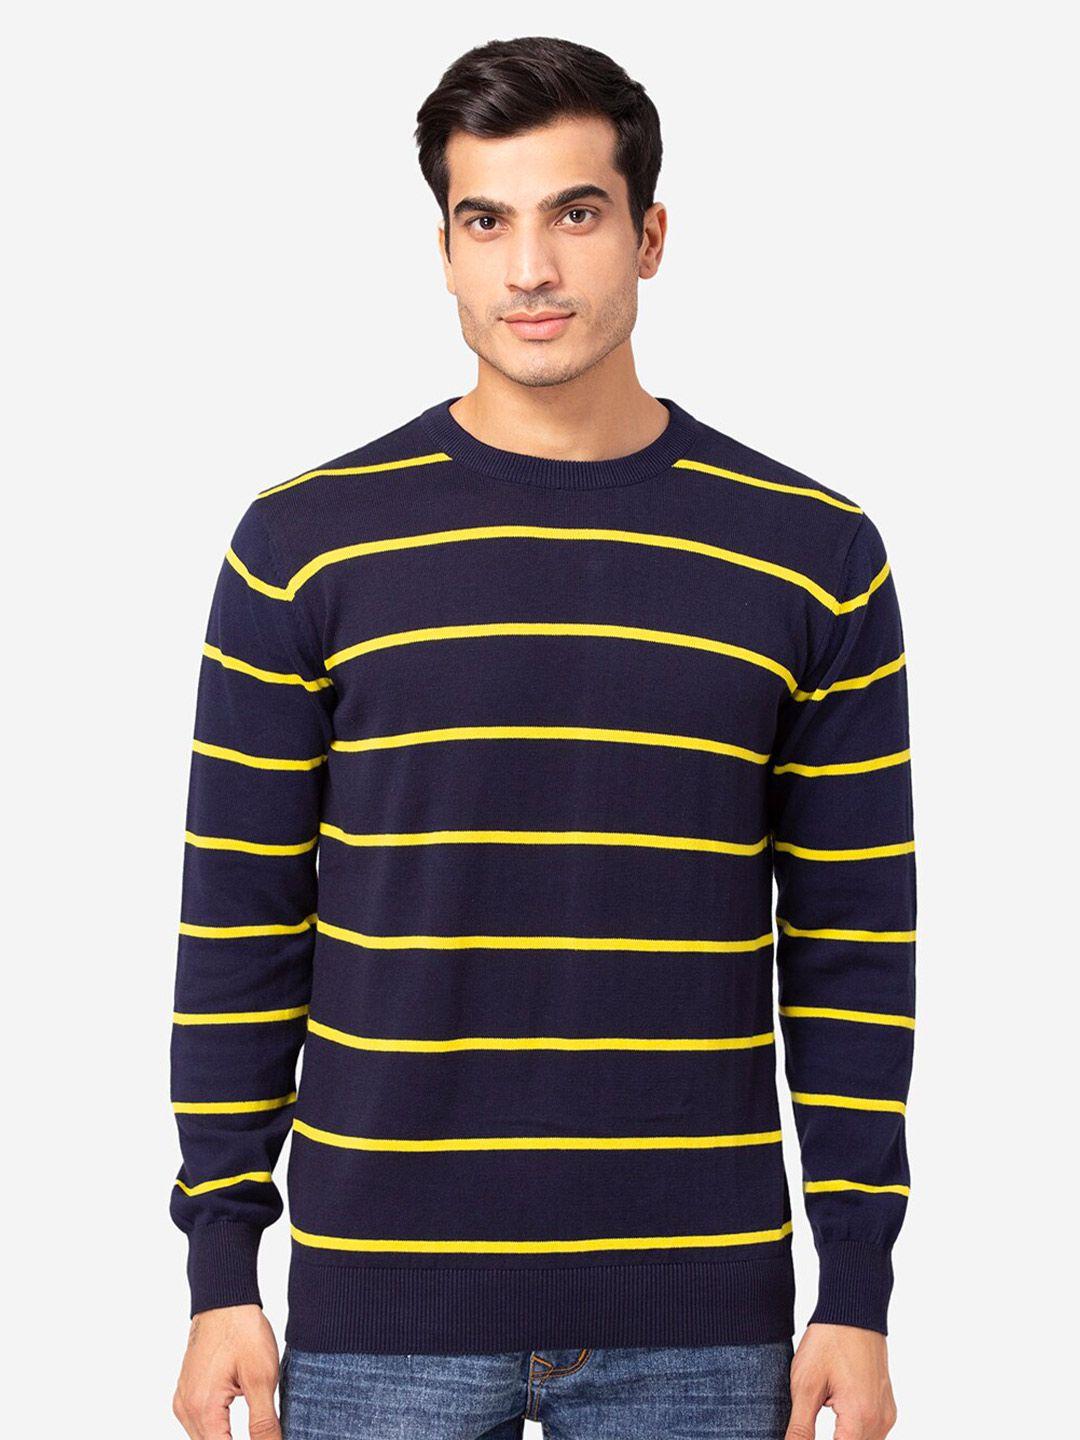 allen-cooper-men-navy-blue-&-yellow-striped-striped-pullover